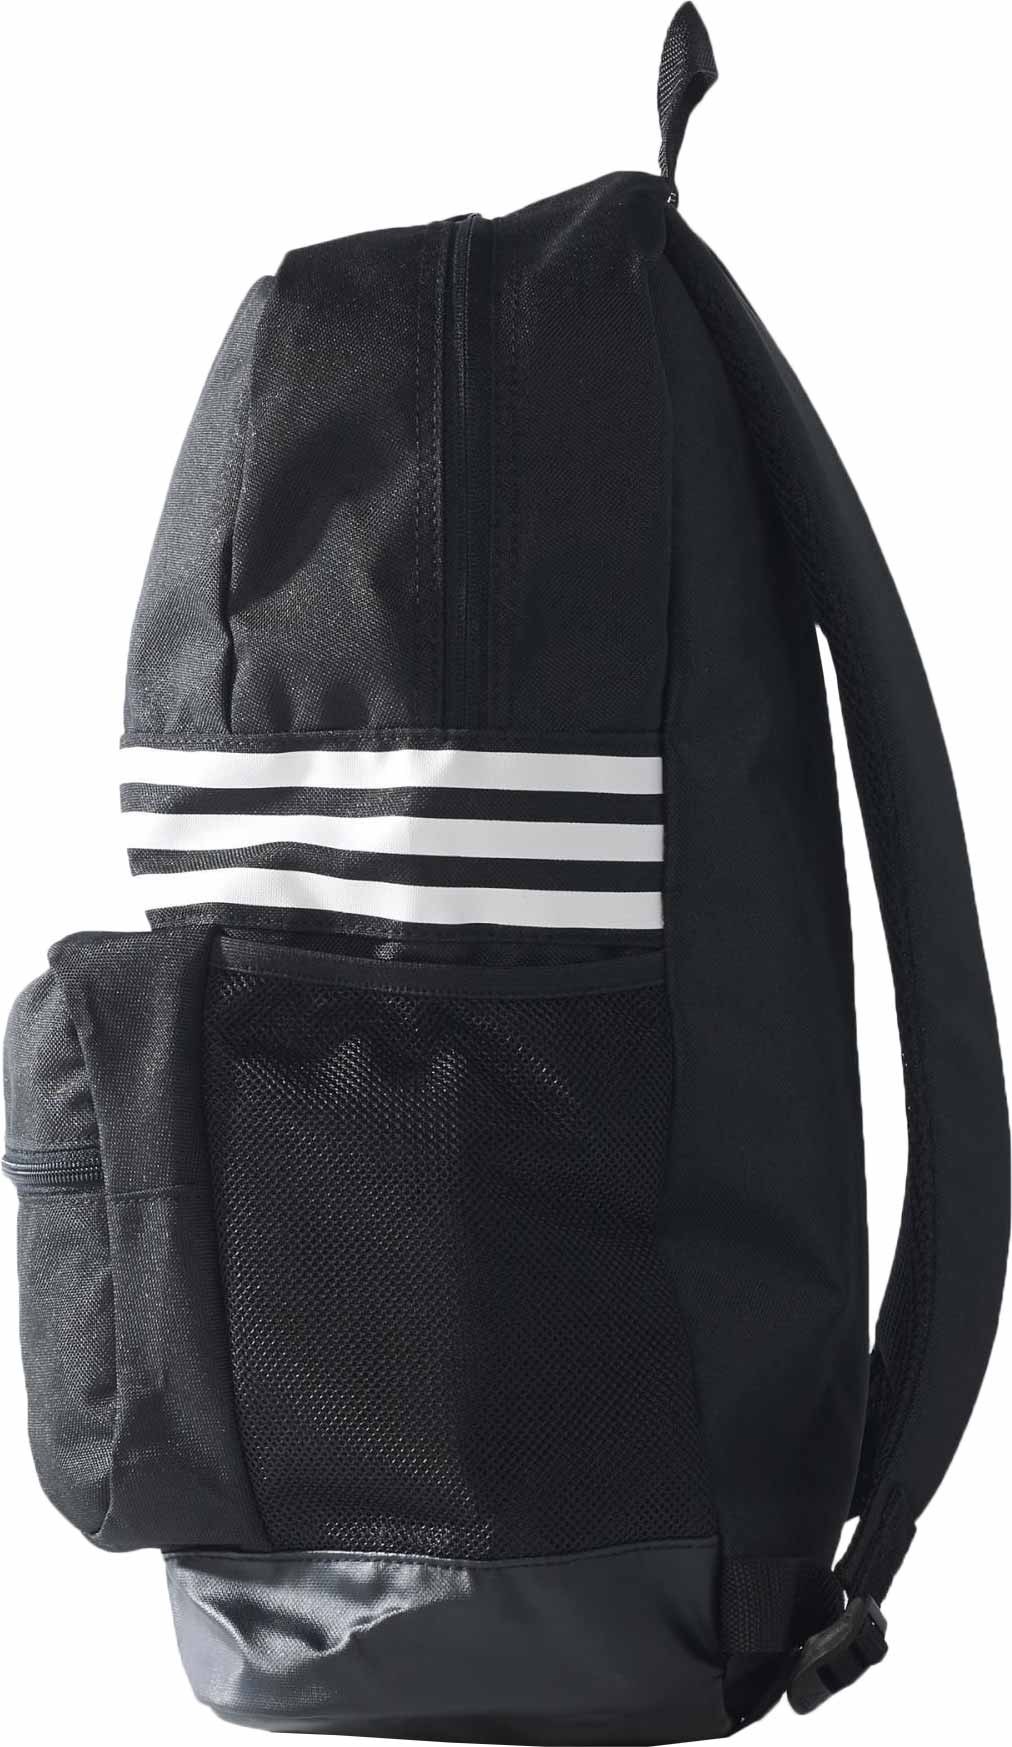 3-STRIPES SPORT M - Sports backpack